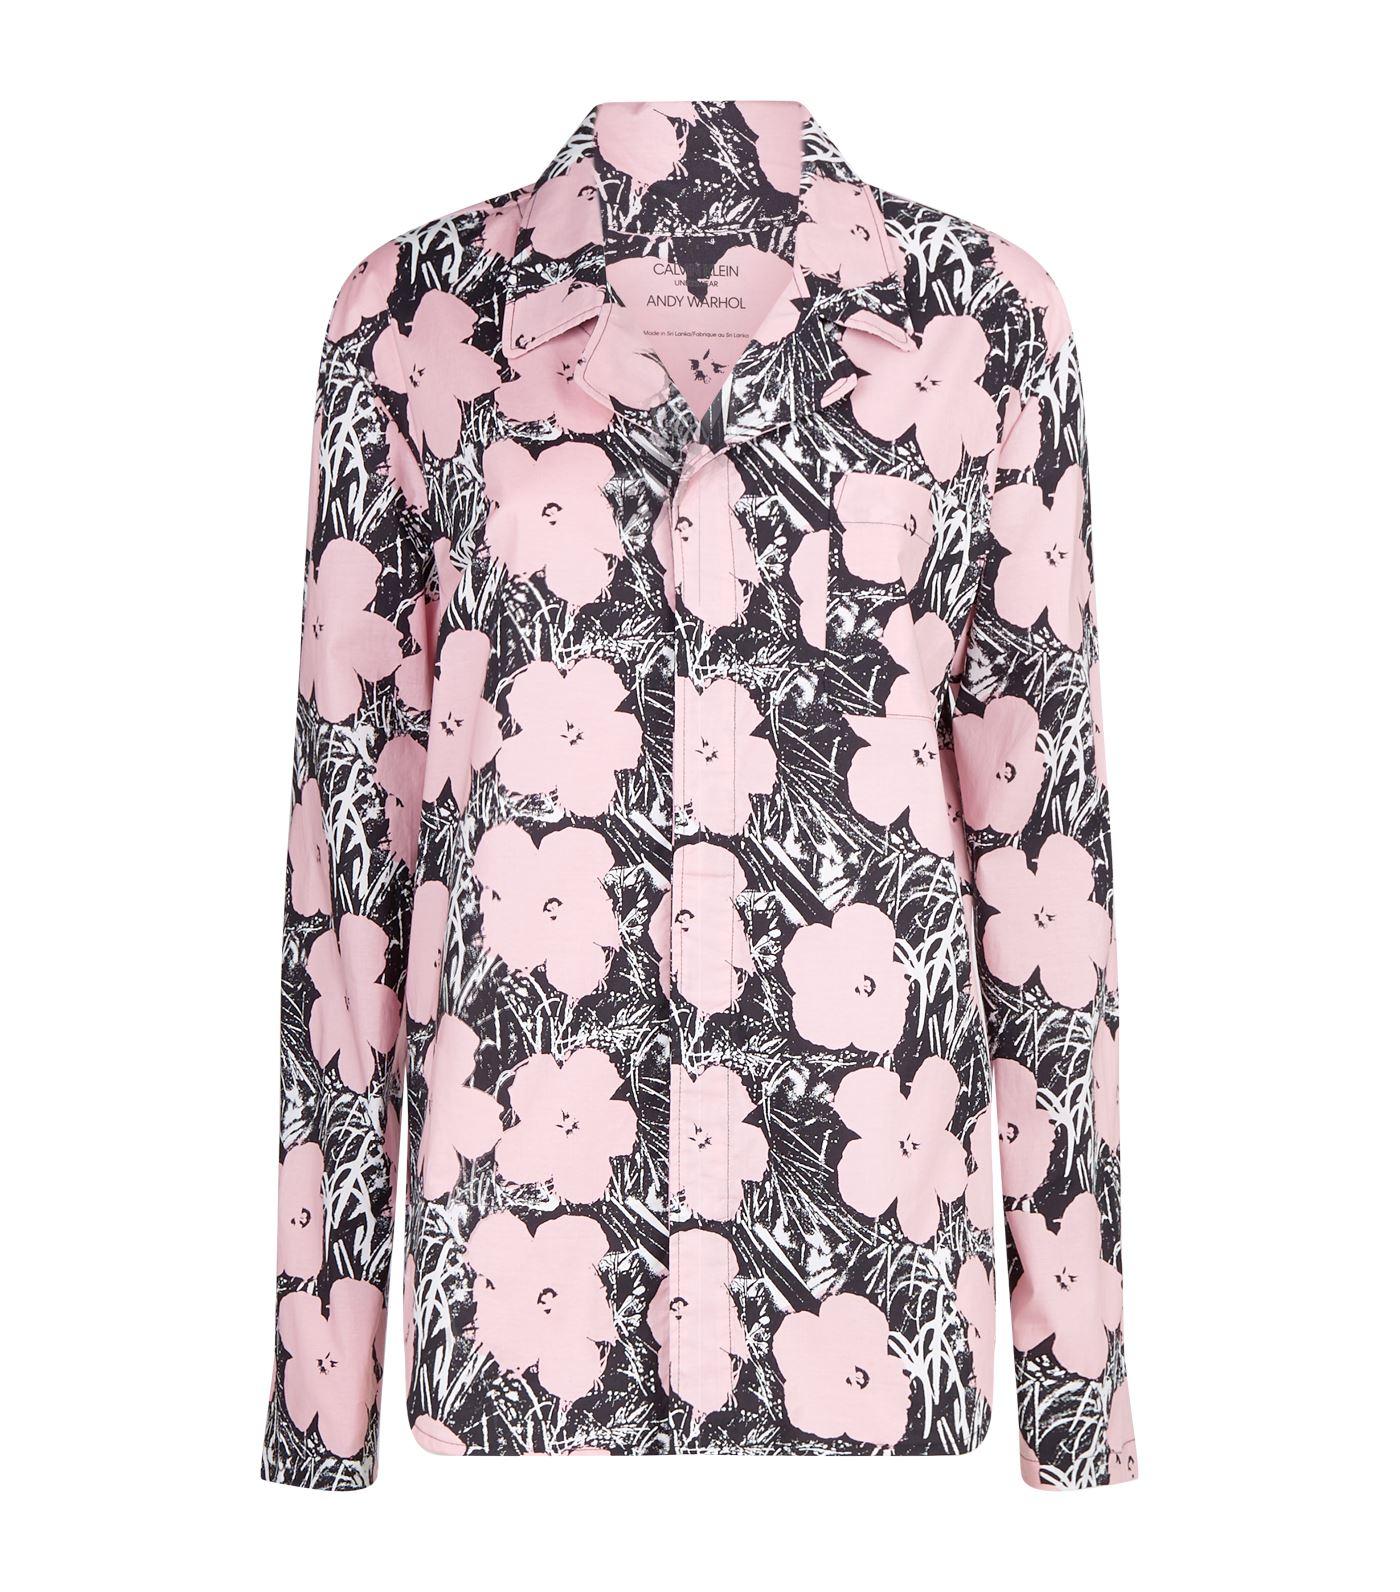 Calvin Klein Cotton Andy Warhol Floral Print Pyjama Top - Pink - Lyst